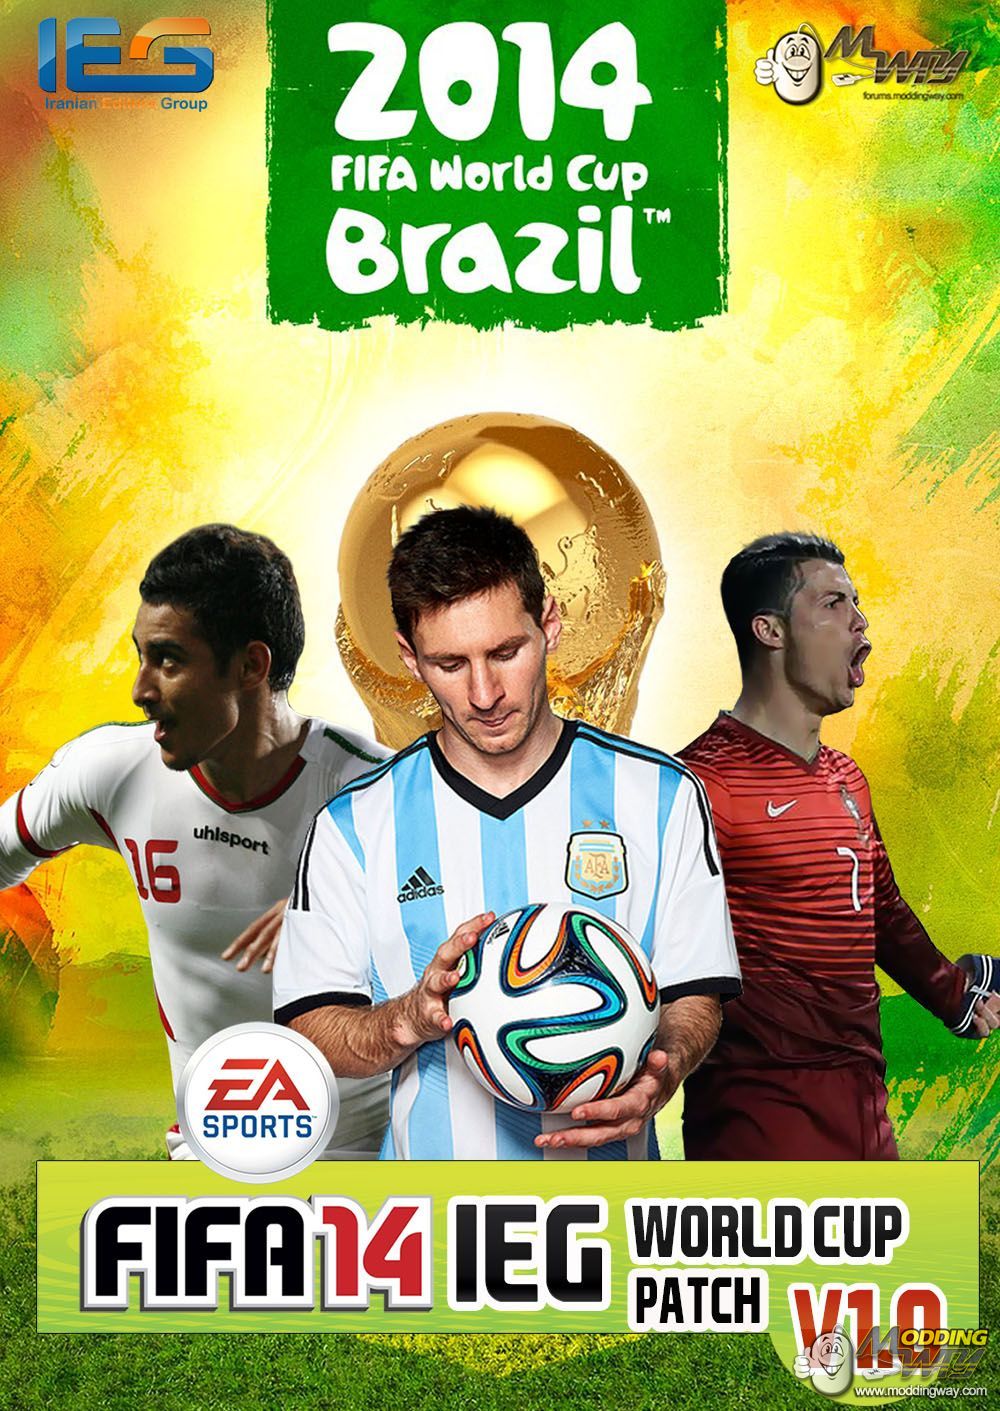 Fifa 14 world cup patch download tpb kinimfa